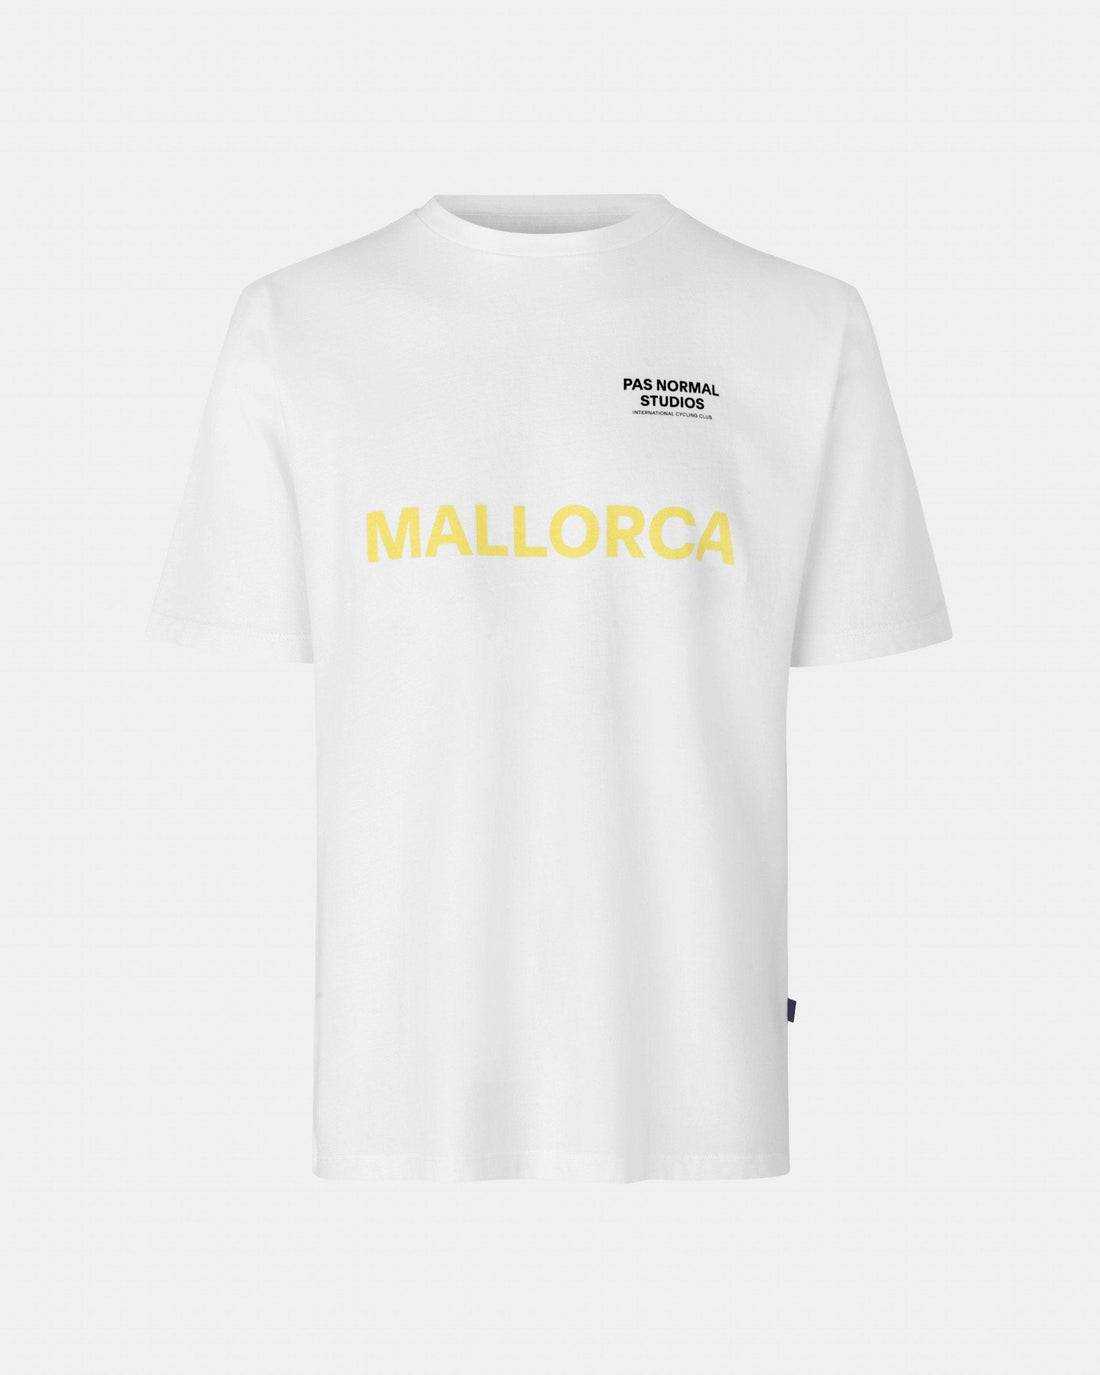 PNS Mallorca T-Shirt - Cykelfiket